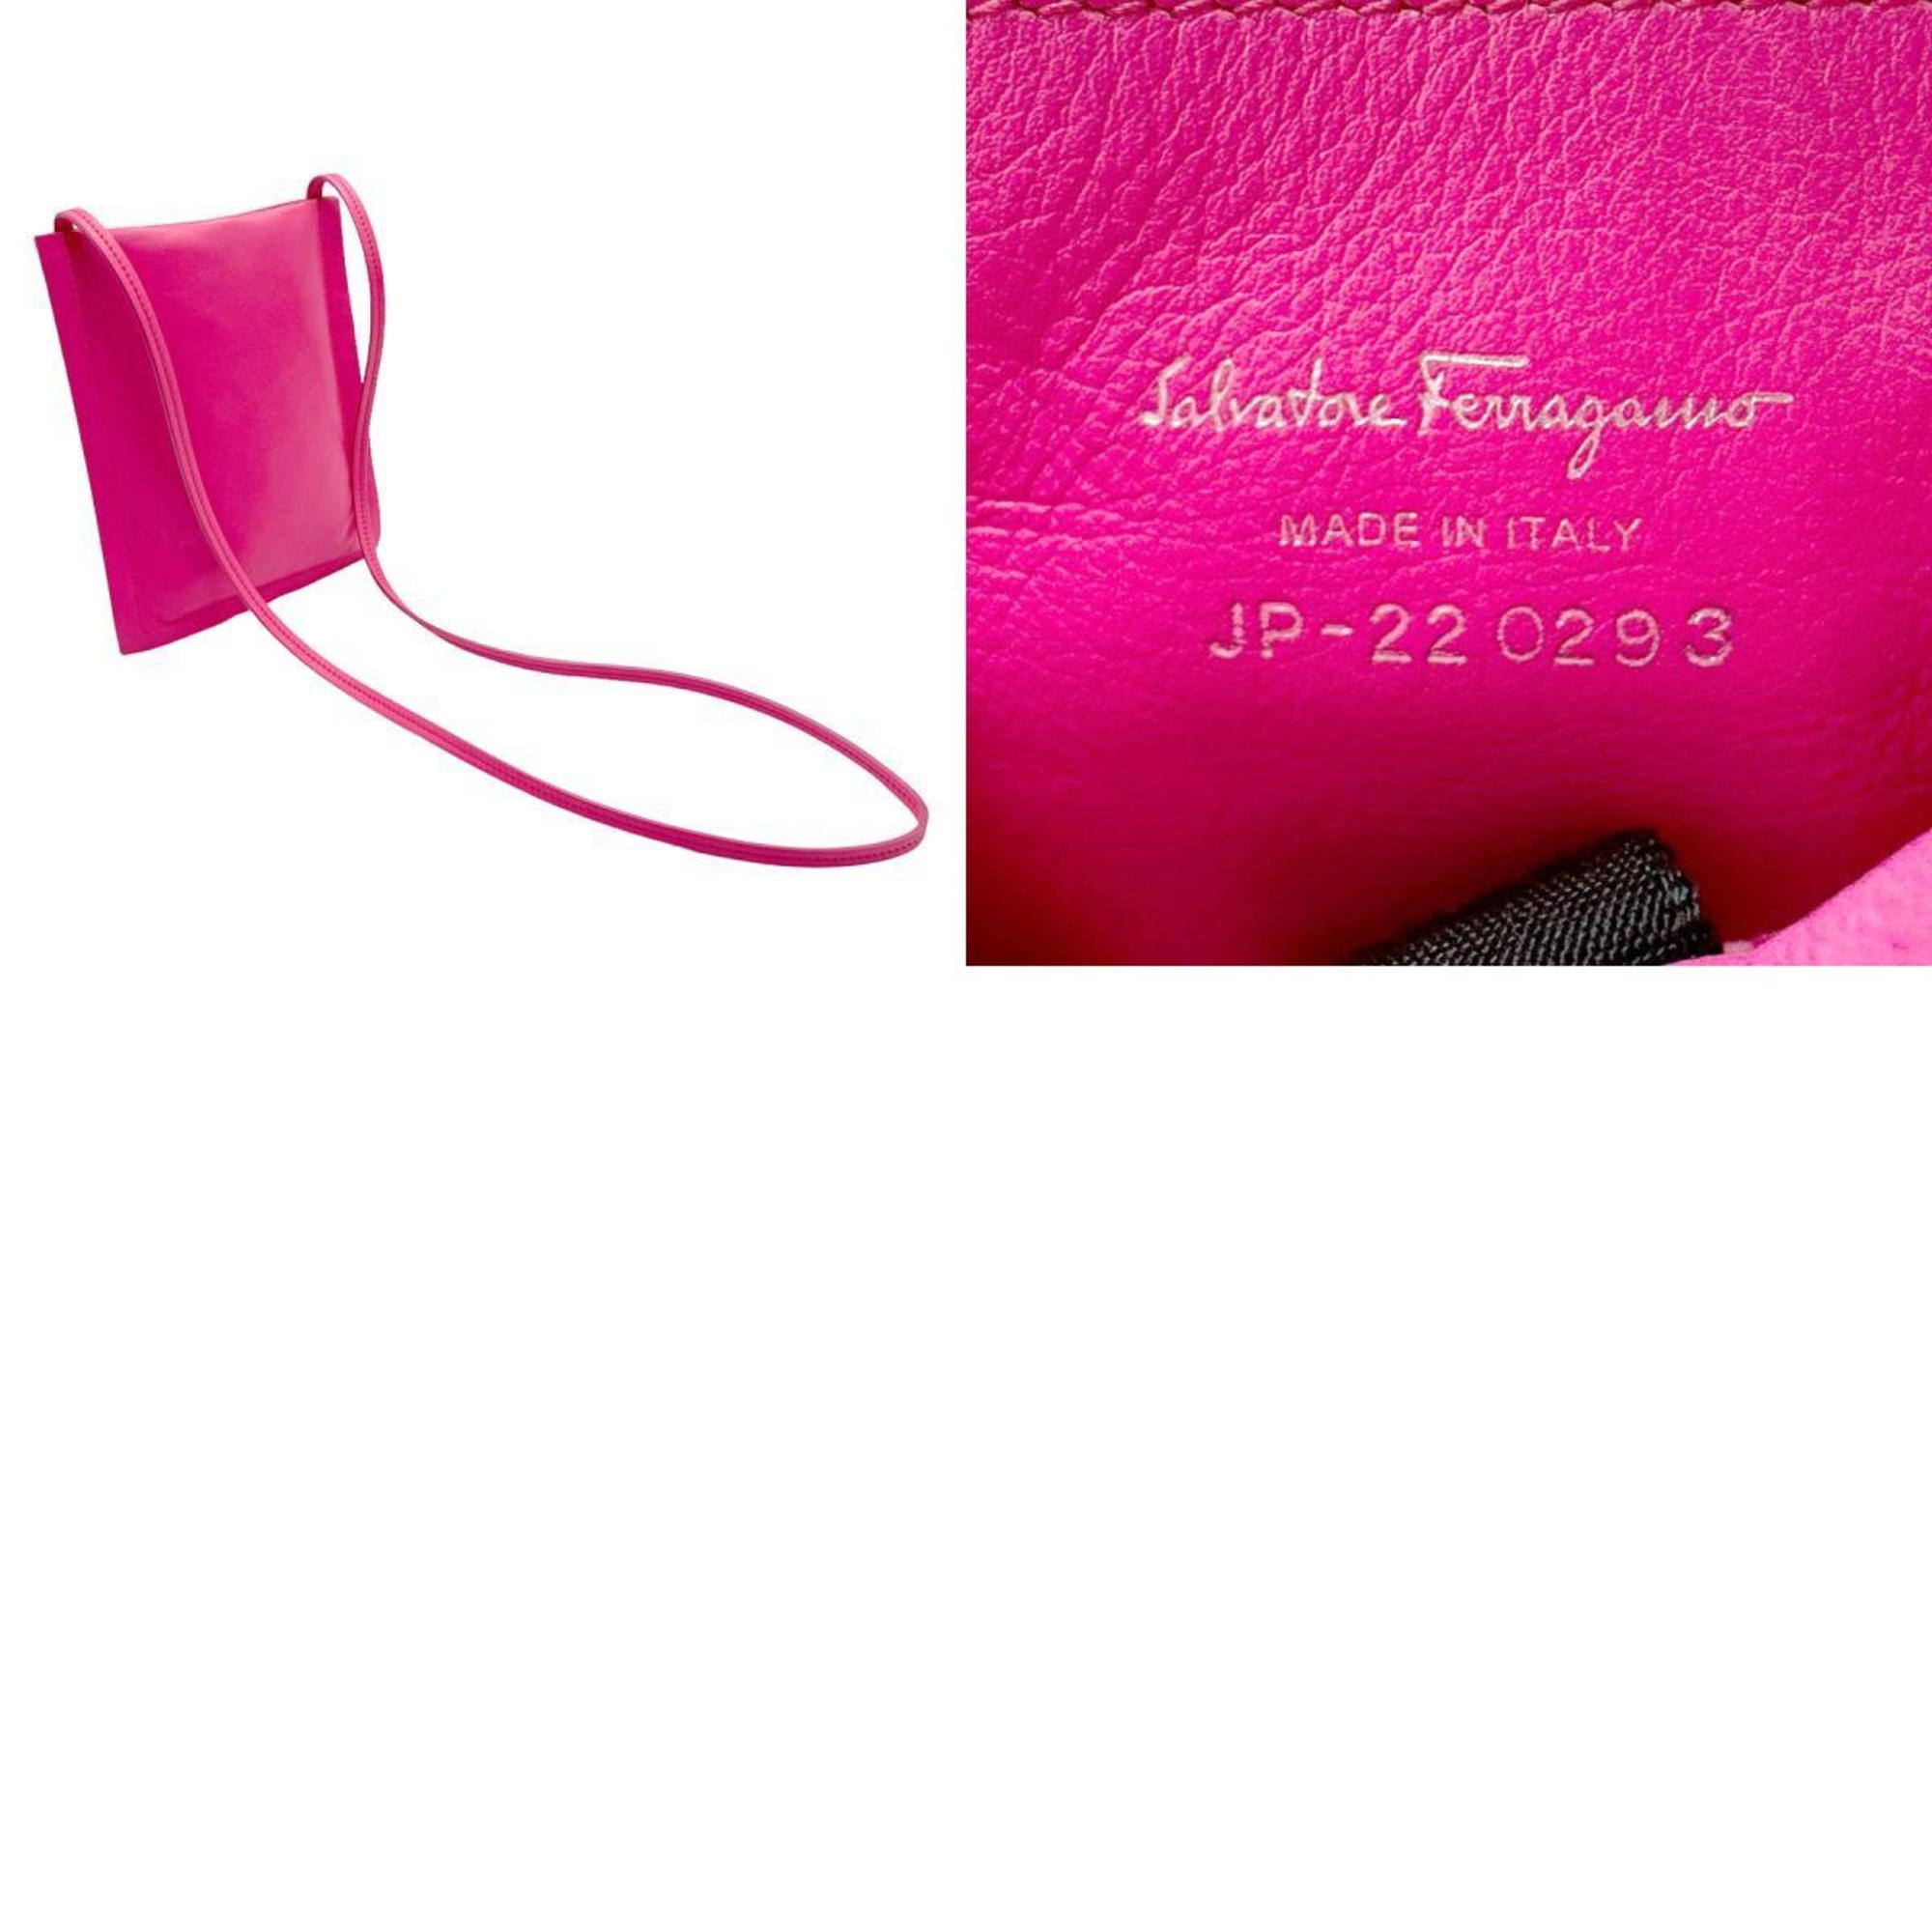 Salvatore Ferragamo Shoulder Bag Vara Ribbon Leather Pink Women's z1513